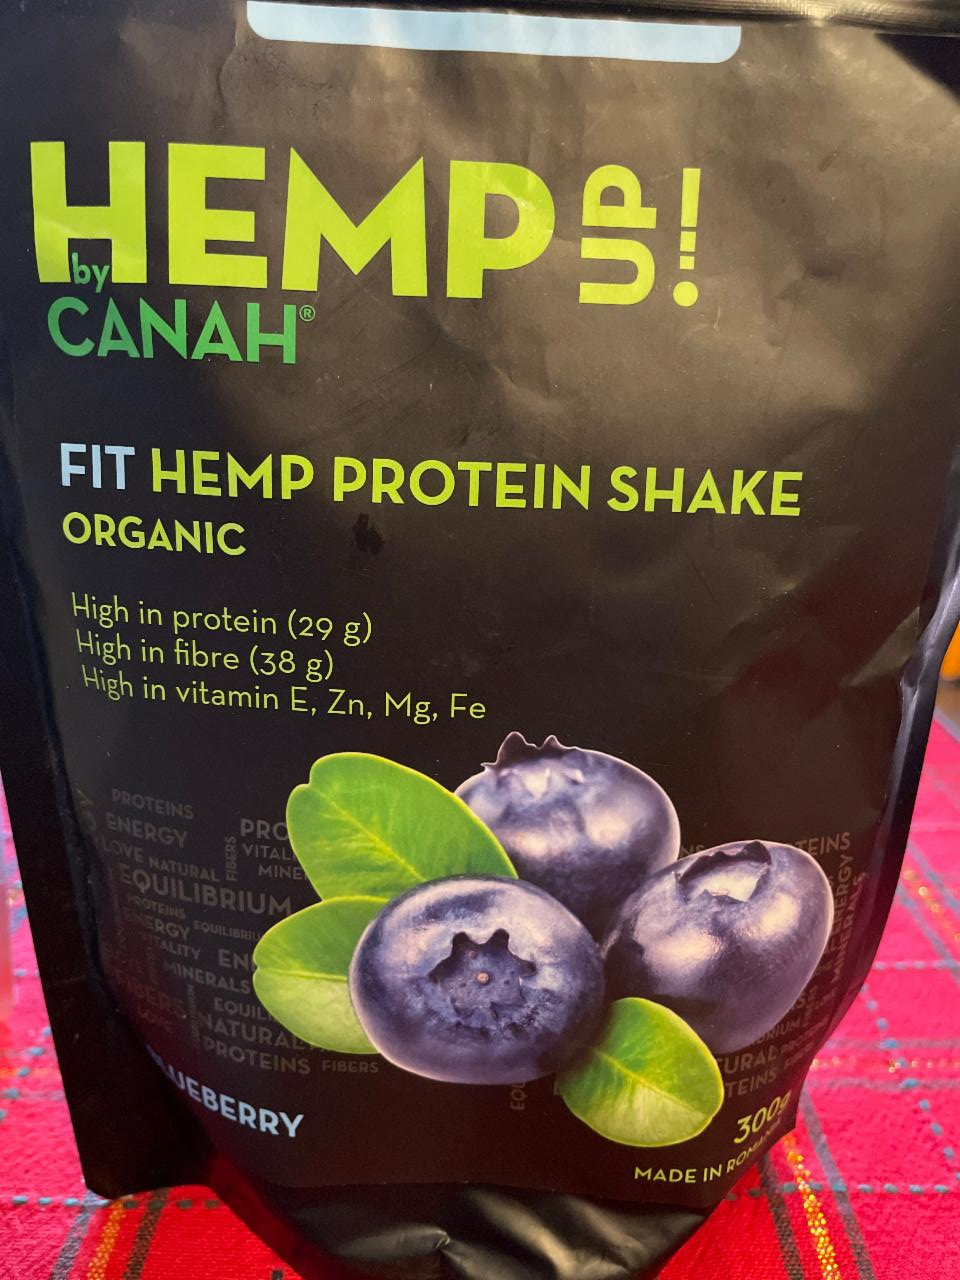 Fotografie - Organic Fit Hemp Protein Shake Blueberry Hemp Up! by Canah